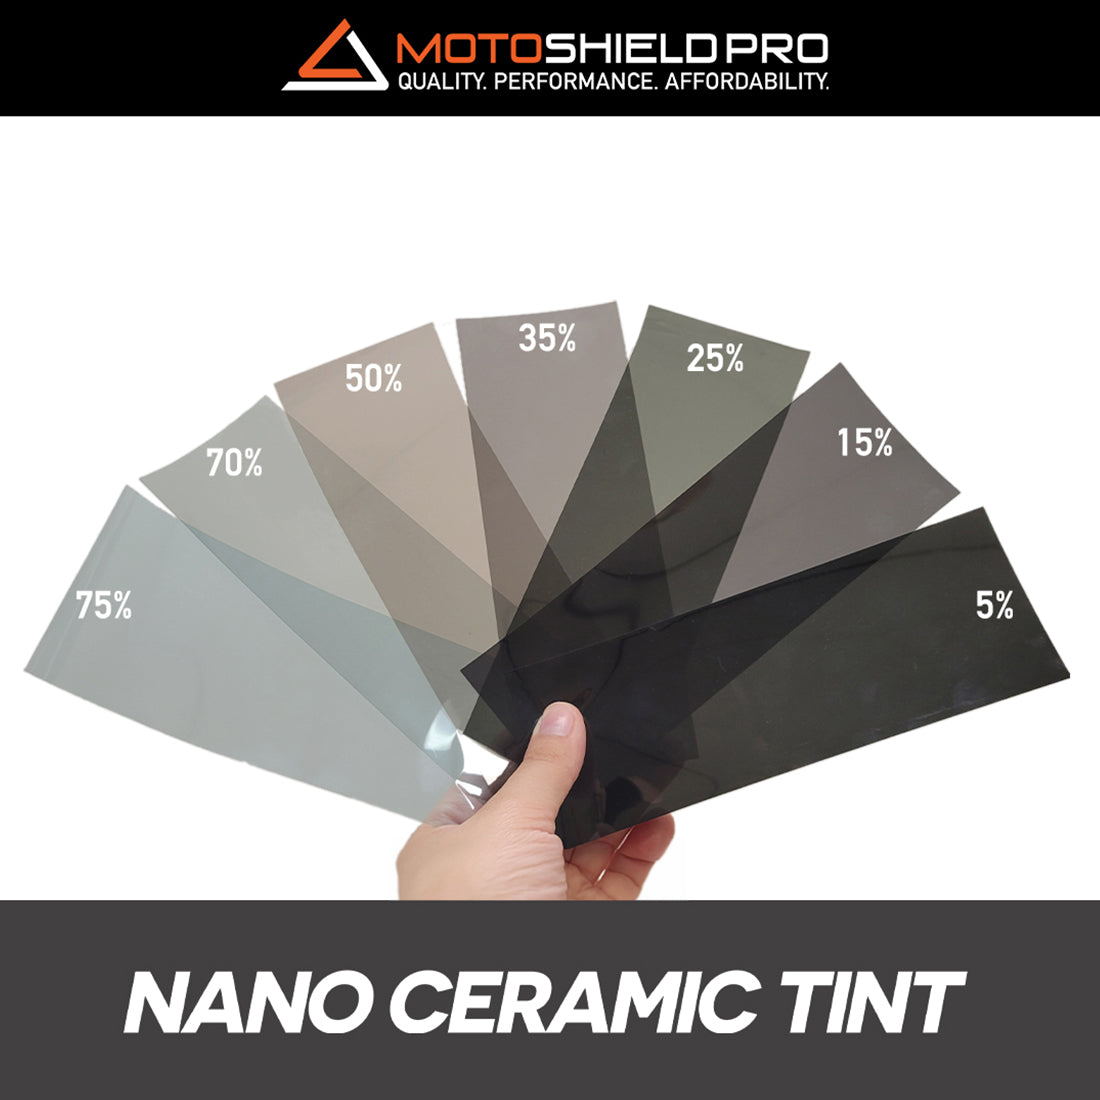 nano ceramic window tint shades VLT visible light transmission by motoshield pro